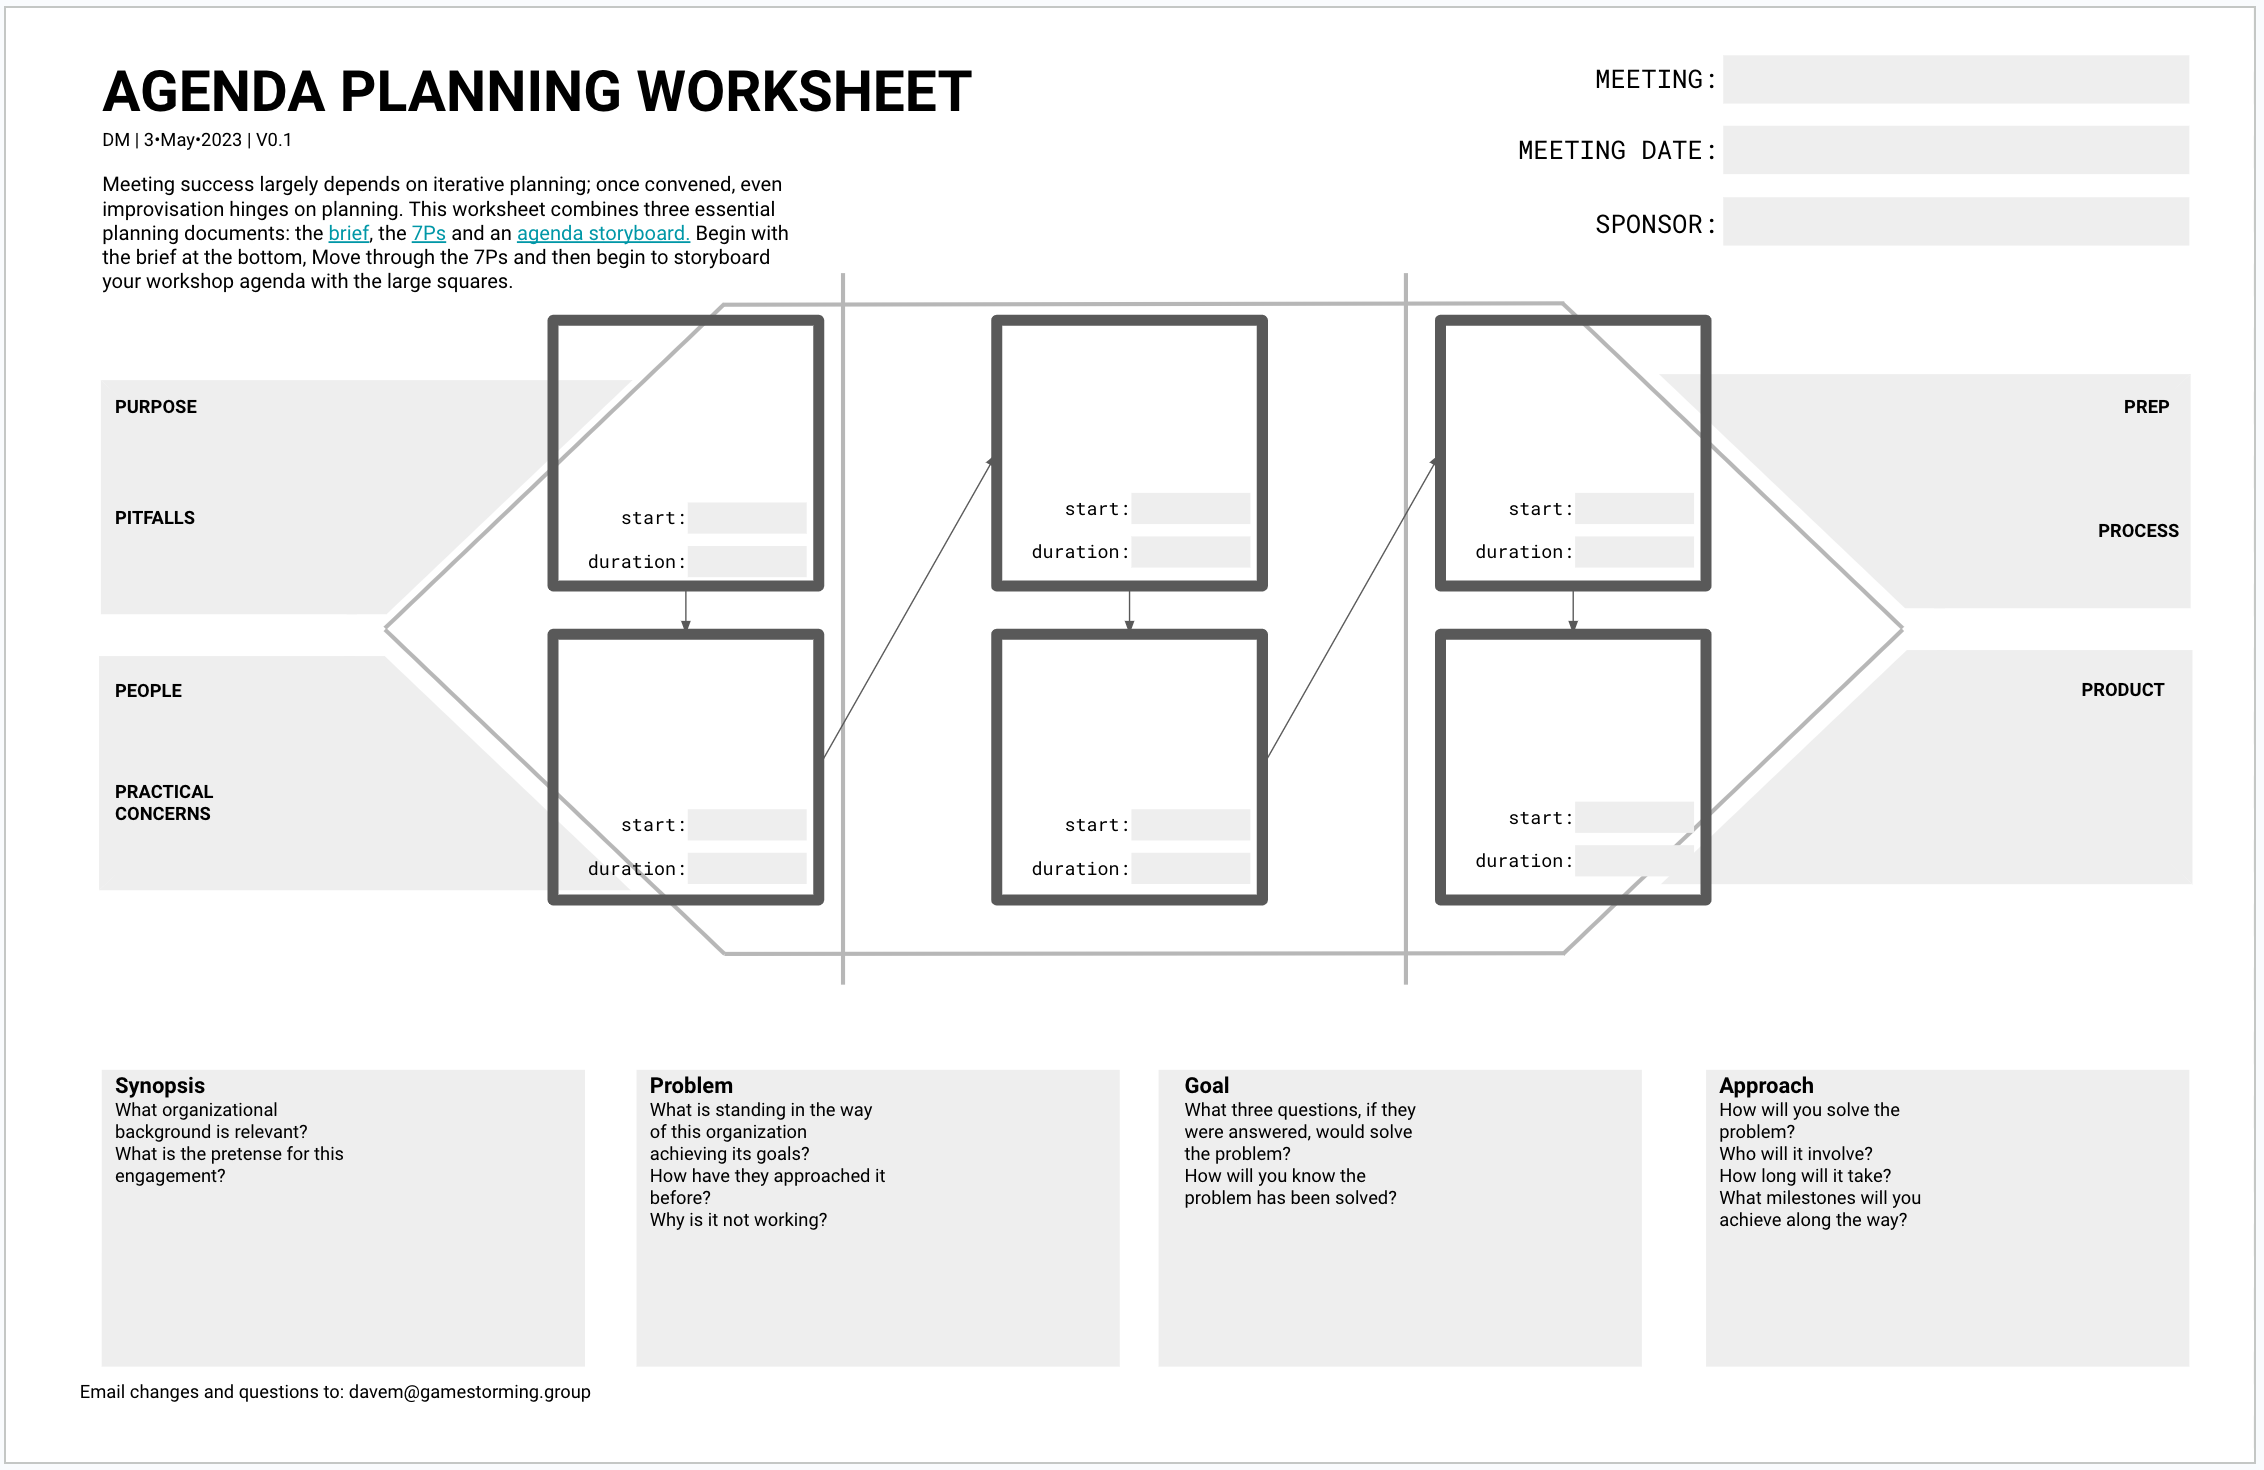 A planning worksheet